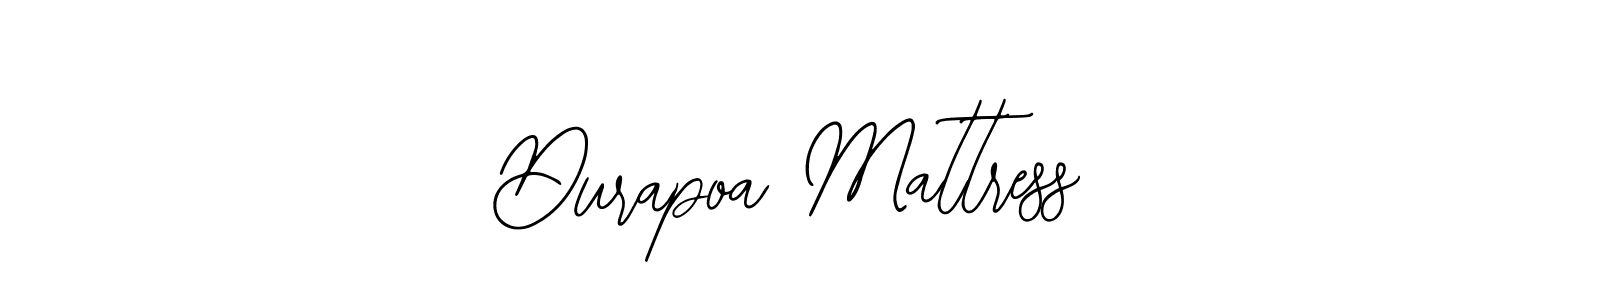 How to make Durapoa Mattress signature? Bearetta-2O07w is a professional autograph style. Create handwritten signature for Durapoa Mattress name. Durapoa Mattress signature style 12 images and pictures png